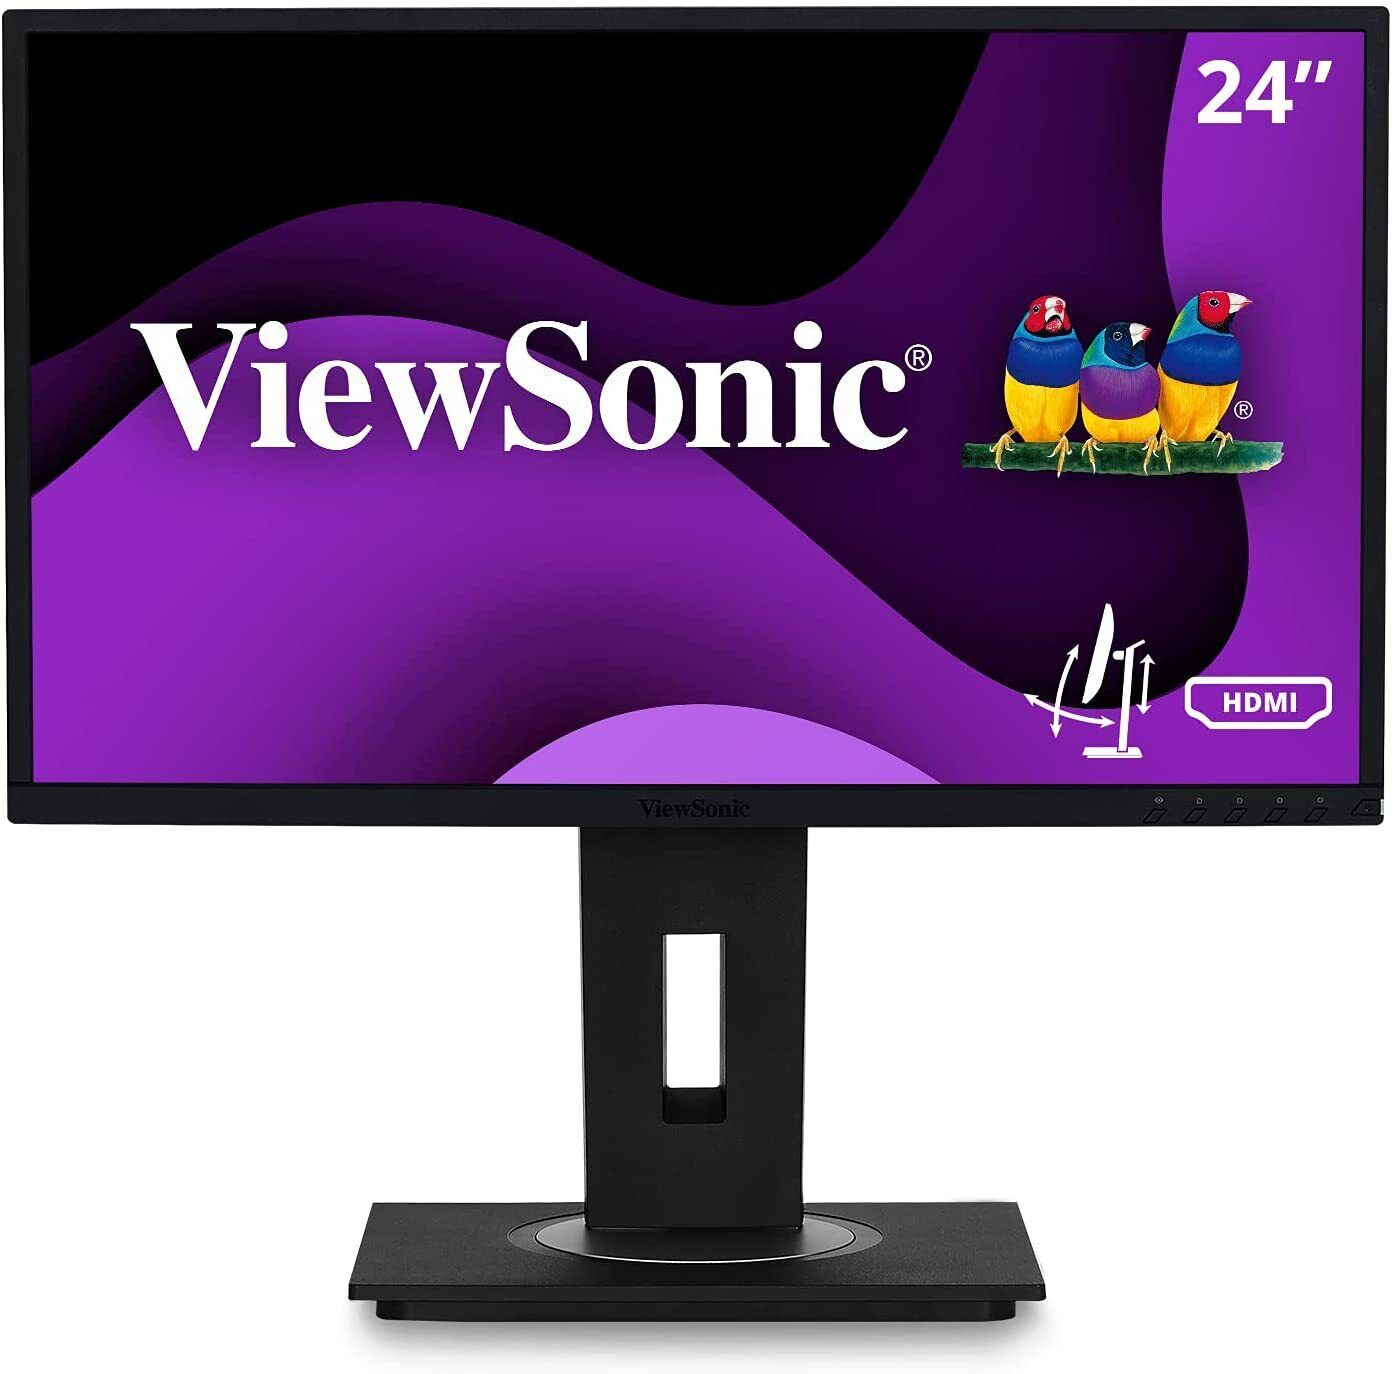 ViewSonic VG2448 24 Inch IPS 1080p Ergonomic Monitor with HDMI DisplayPort USB